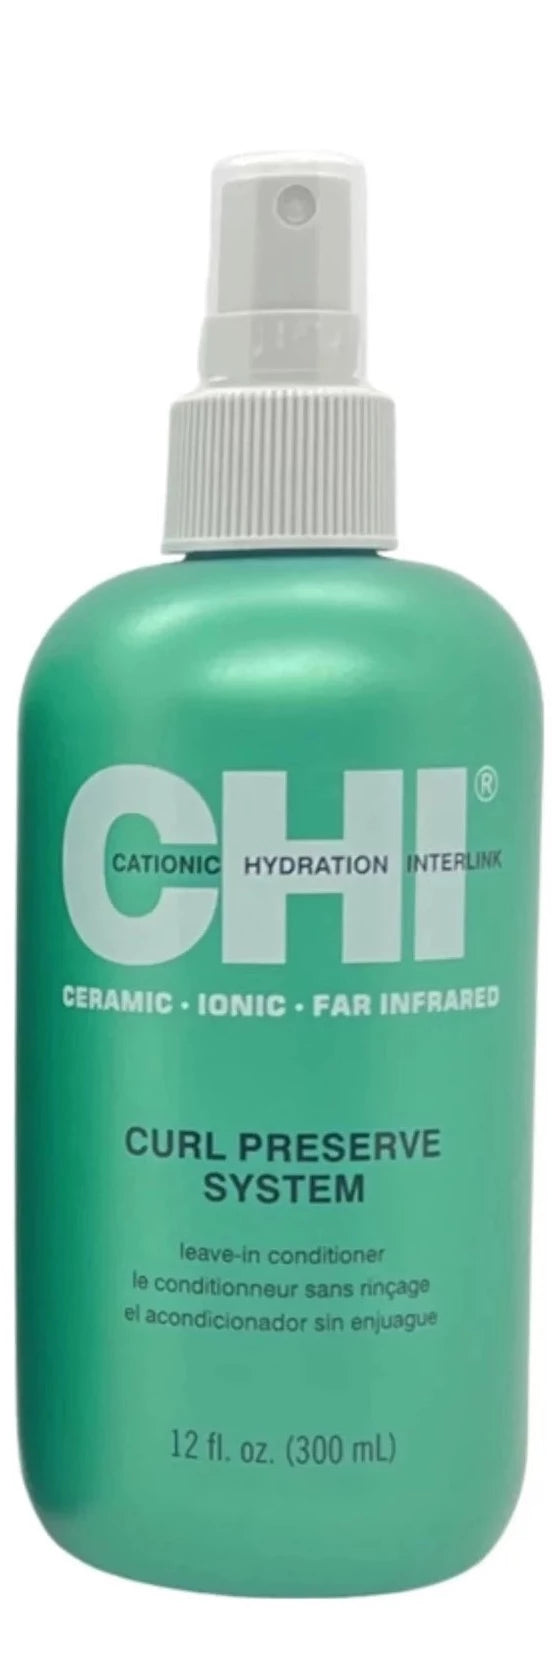 CHI Curl Preserve System Leave-In Conditioner image of 12 oz bottle